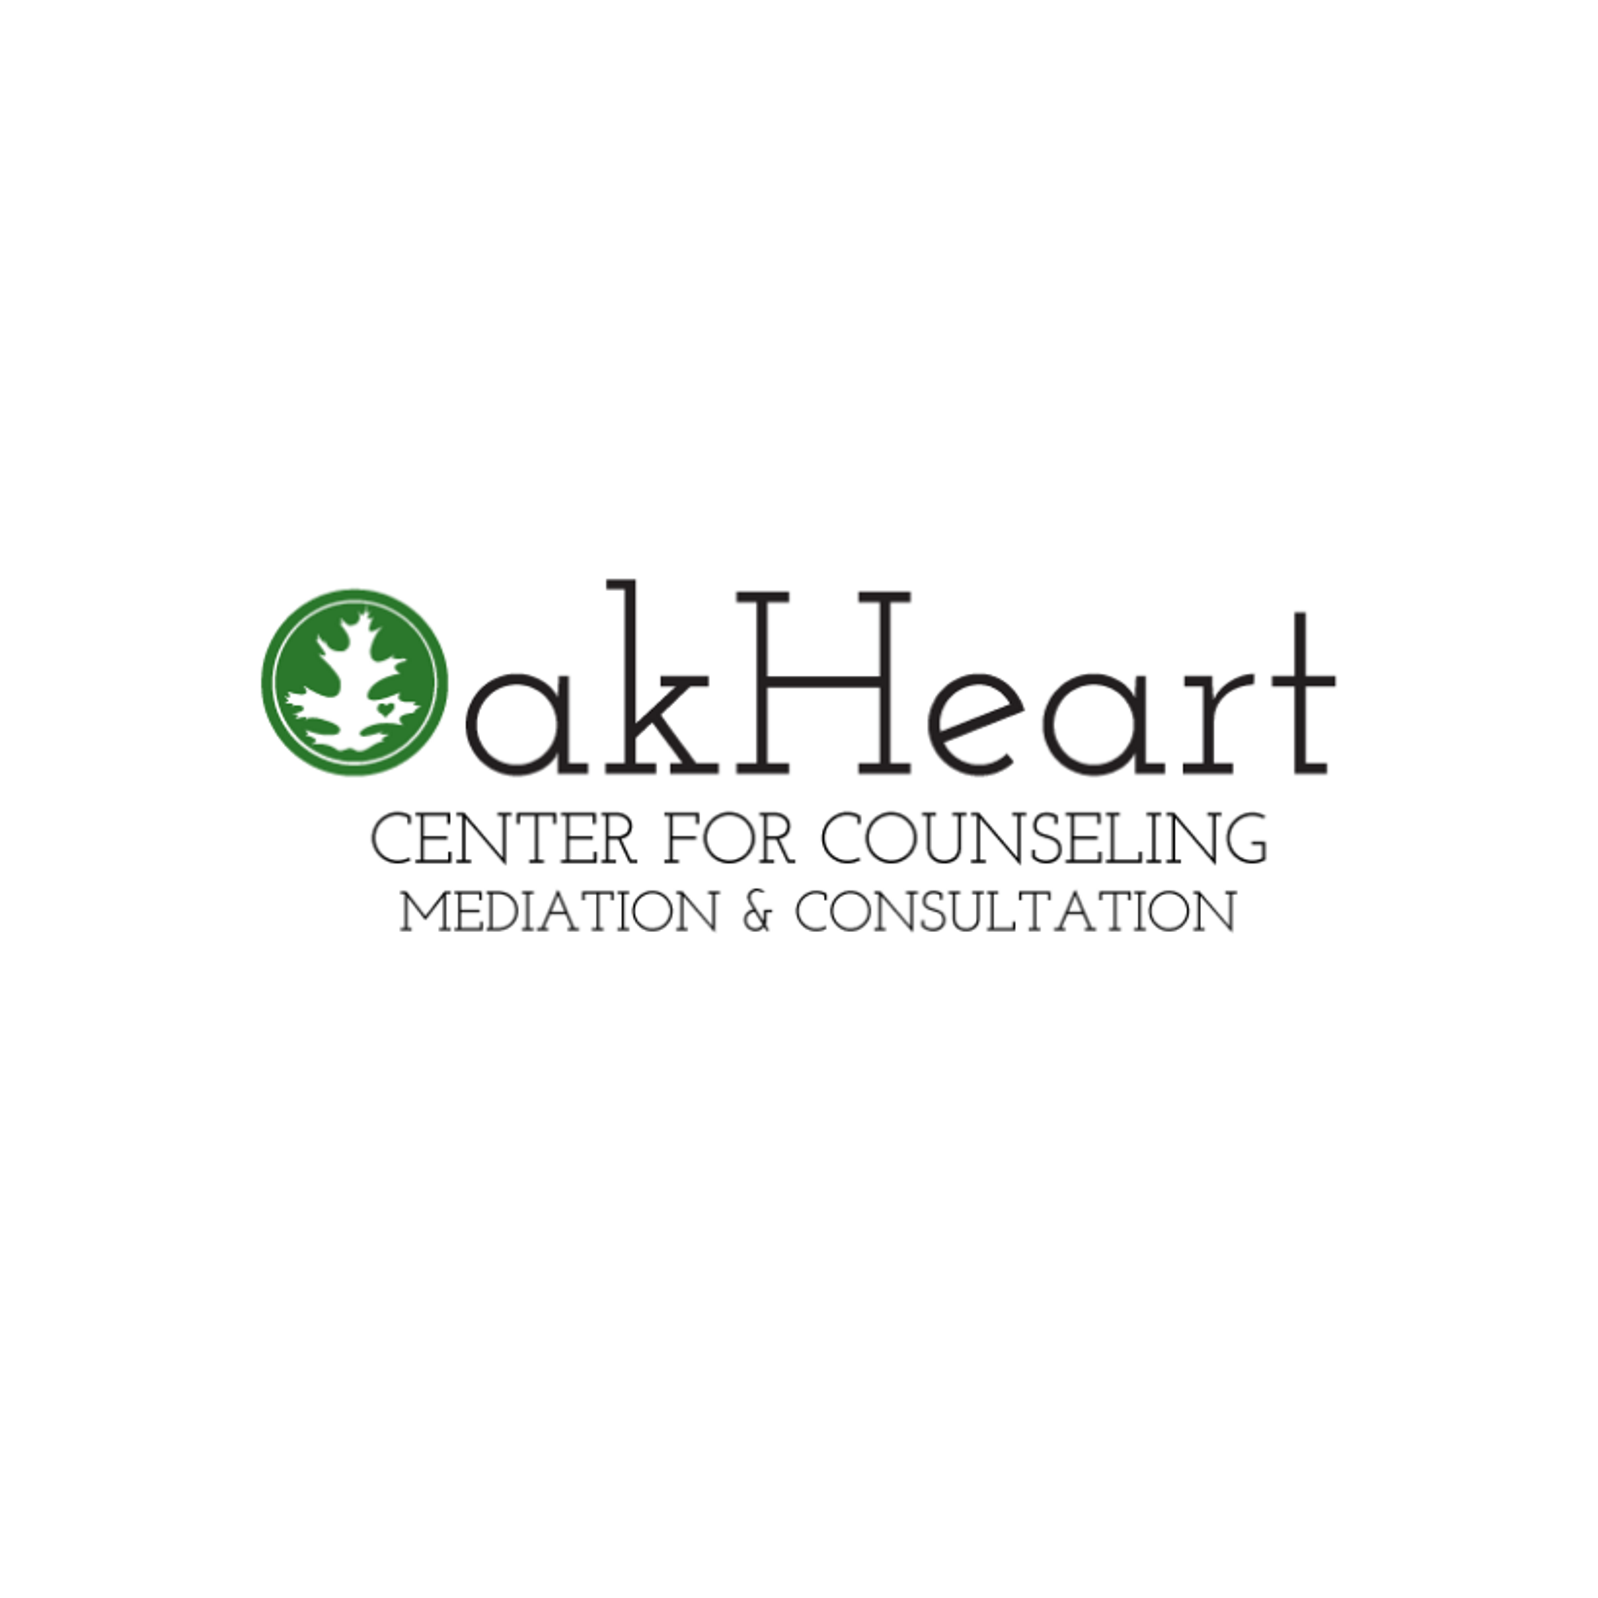 OakHeart Center for Counseling Mediation & Consultation Photo